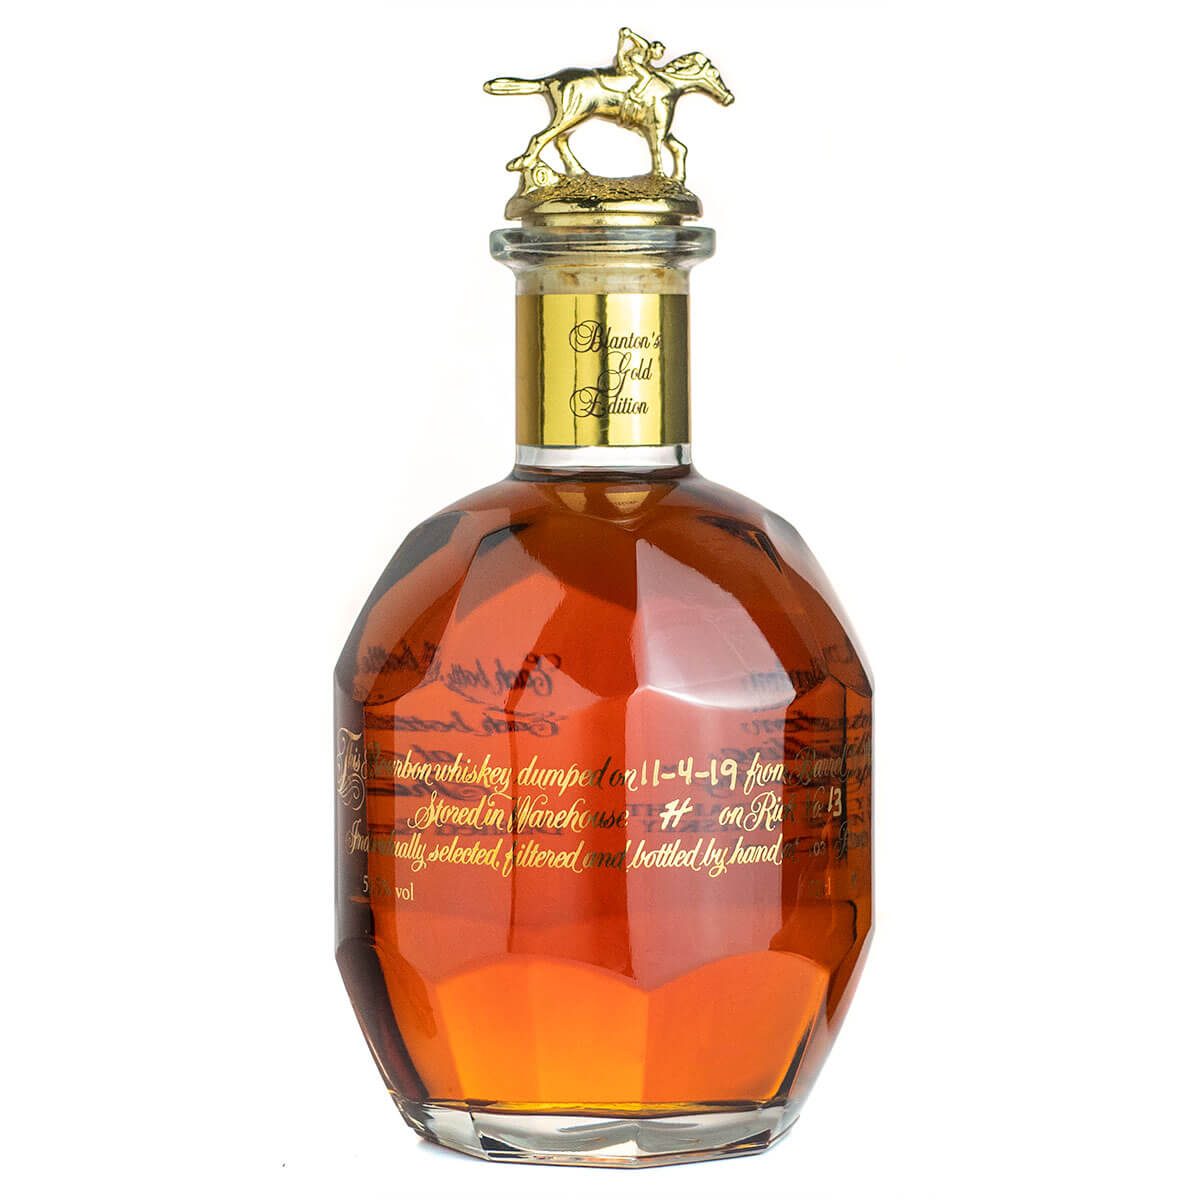 Blanton's Gold Edition bottle